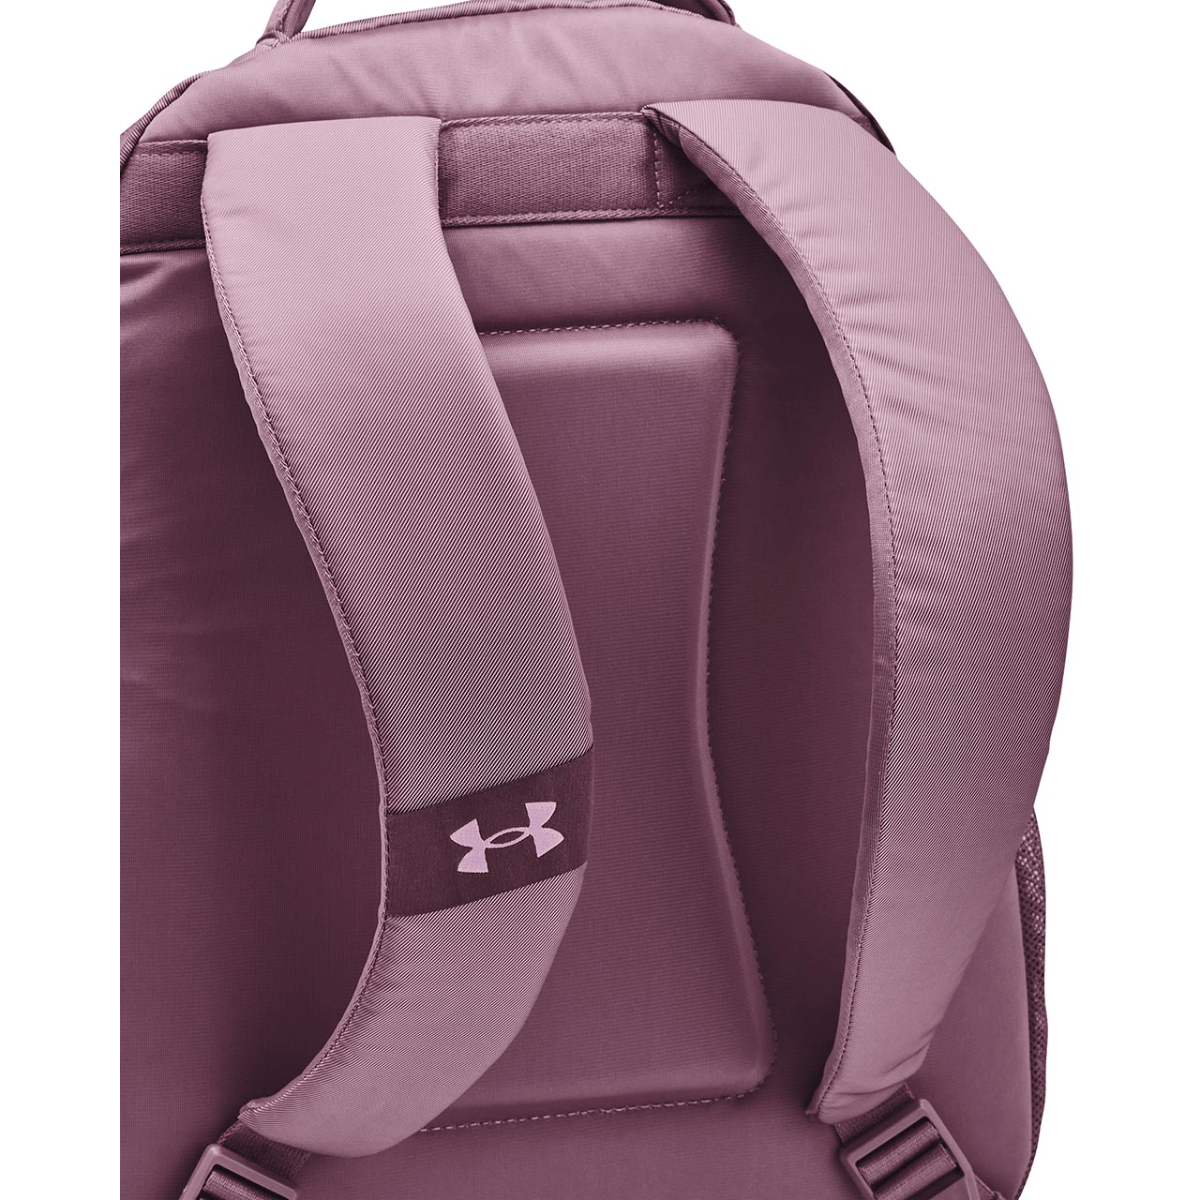 Under Armour Hustle Sport Backpack Misty Purple/ White